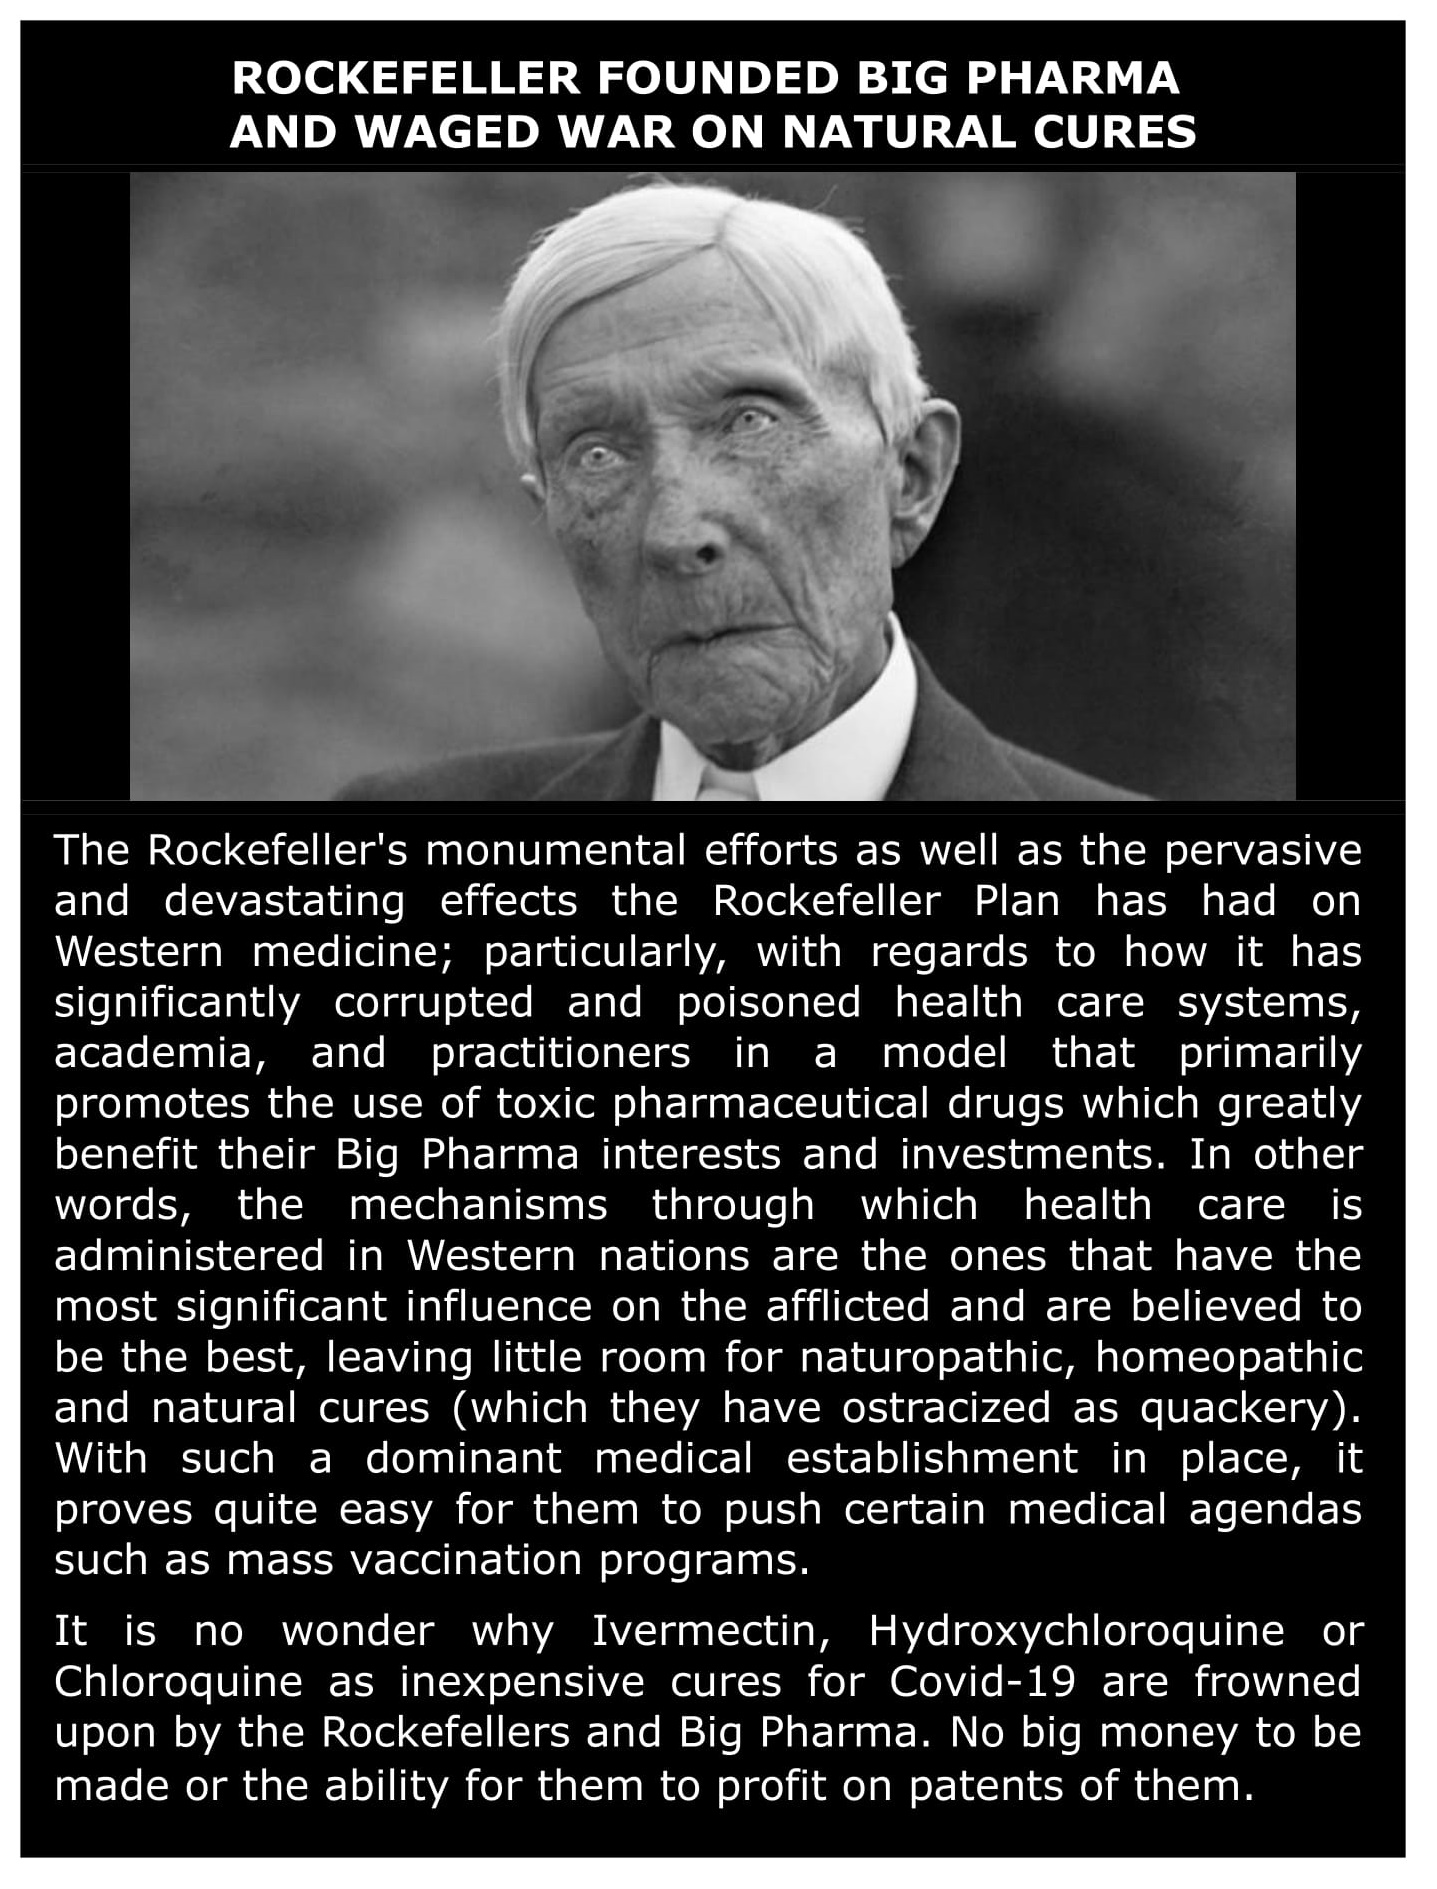 Rockefeller and Big Pharma